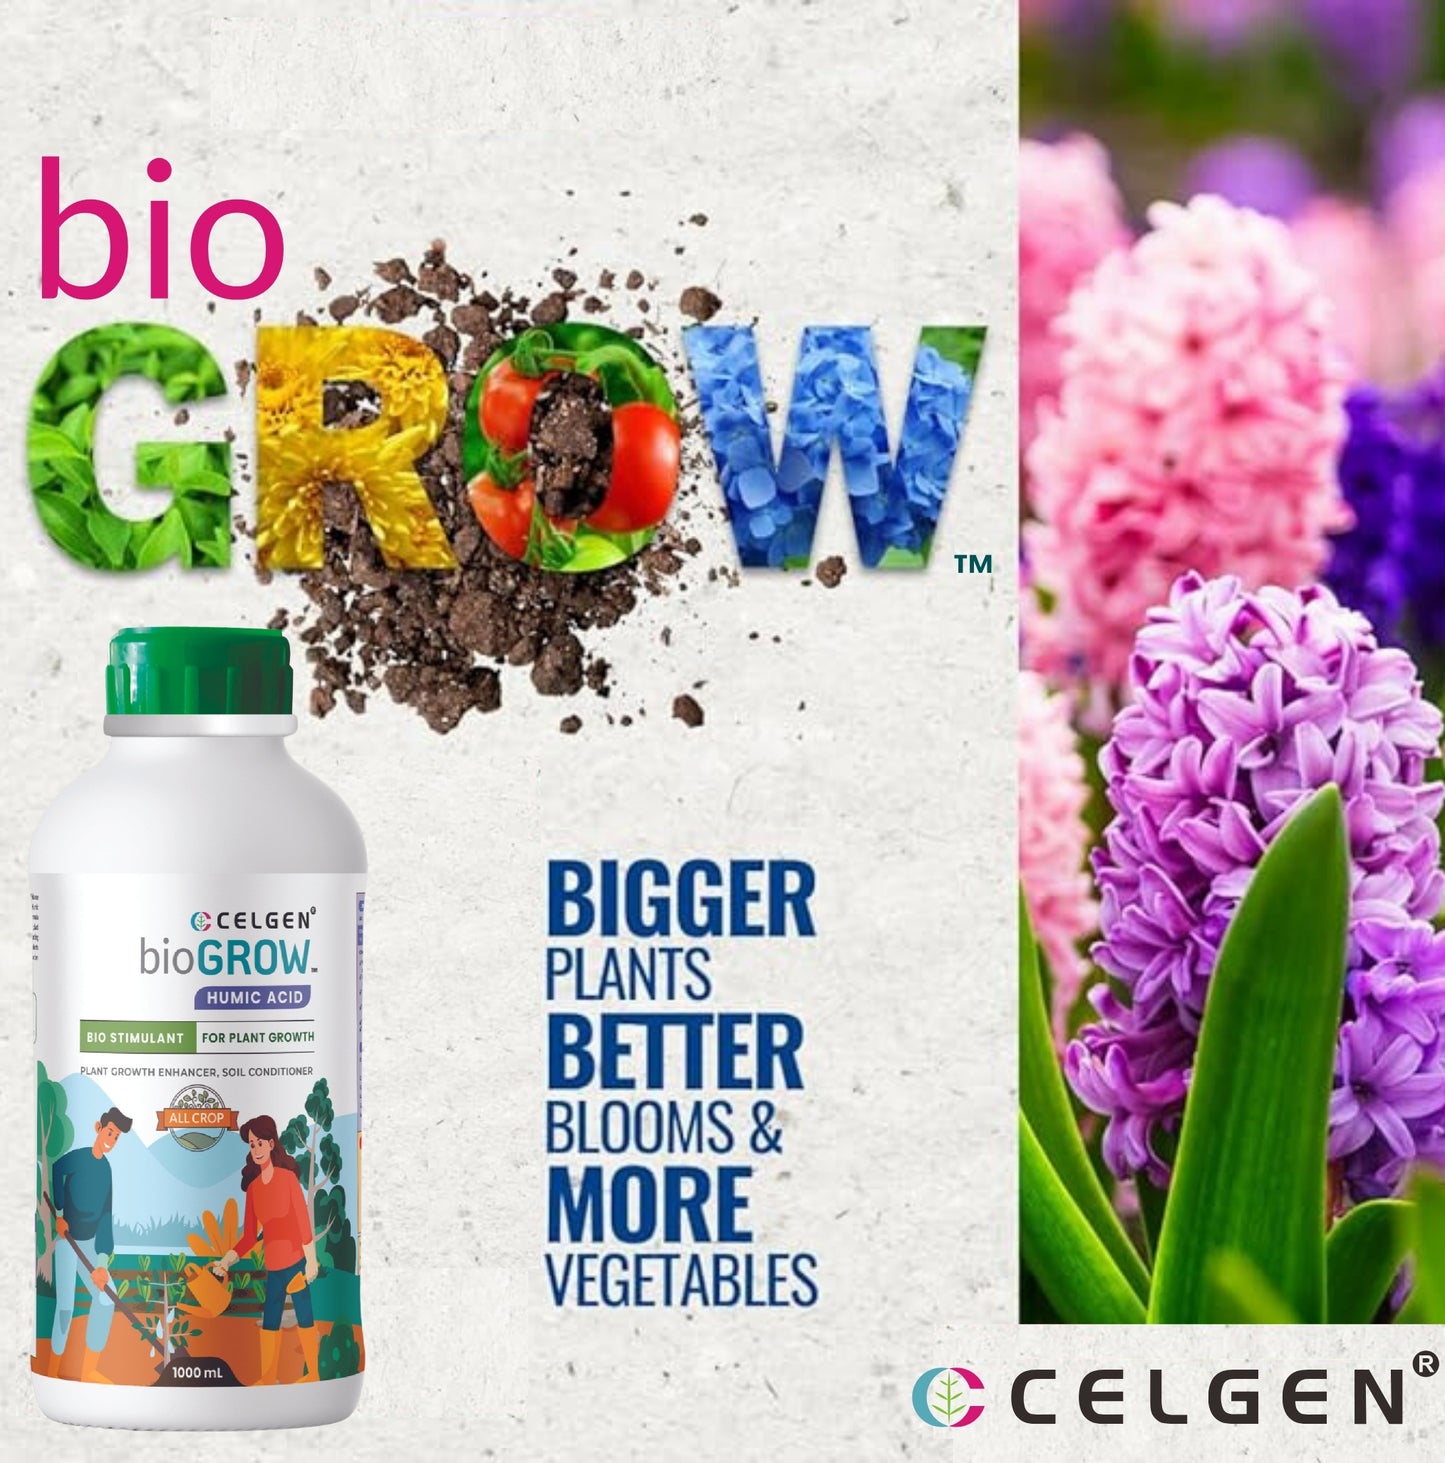 Celgen-bioGROW Humic Acid Liquid Plant Nutrient Booster